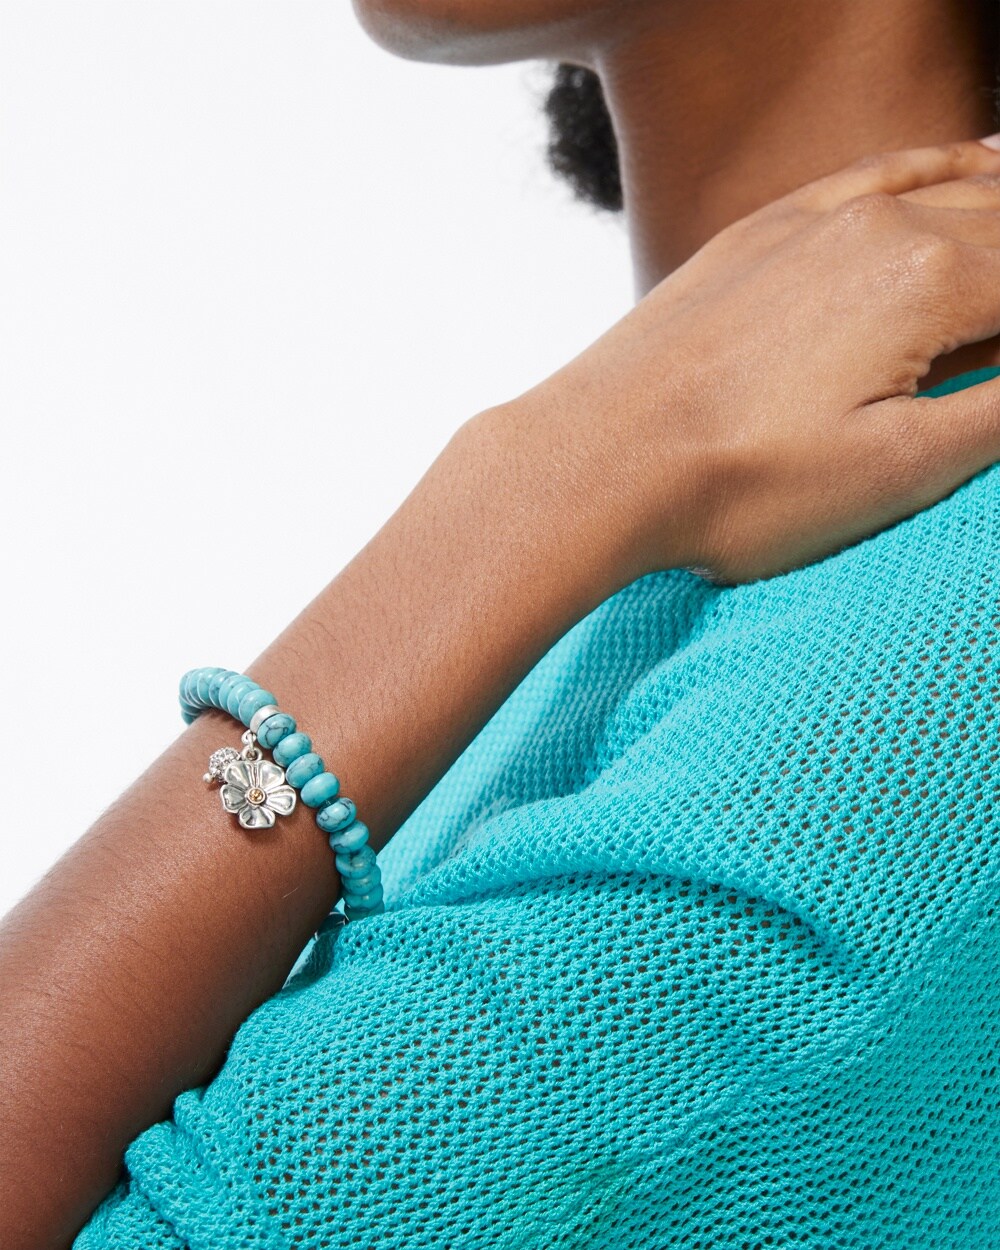 Turquoise Stretch Bracelet